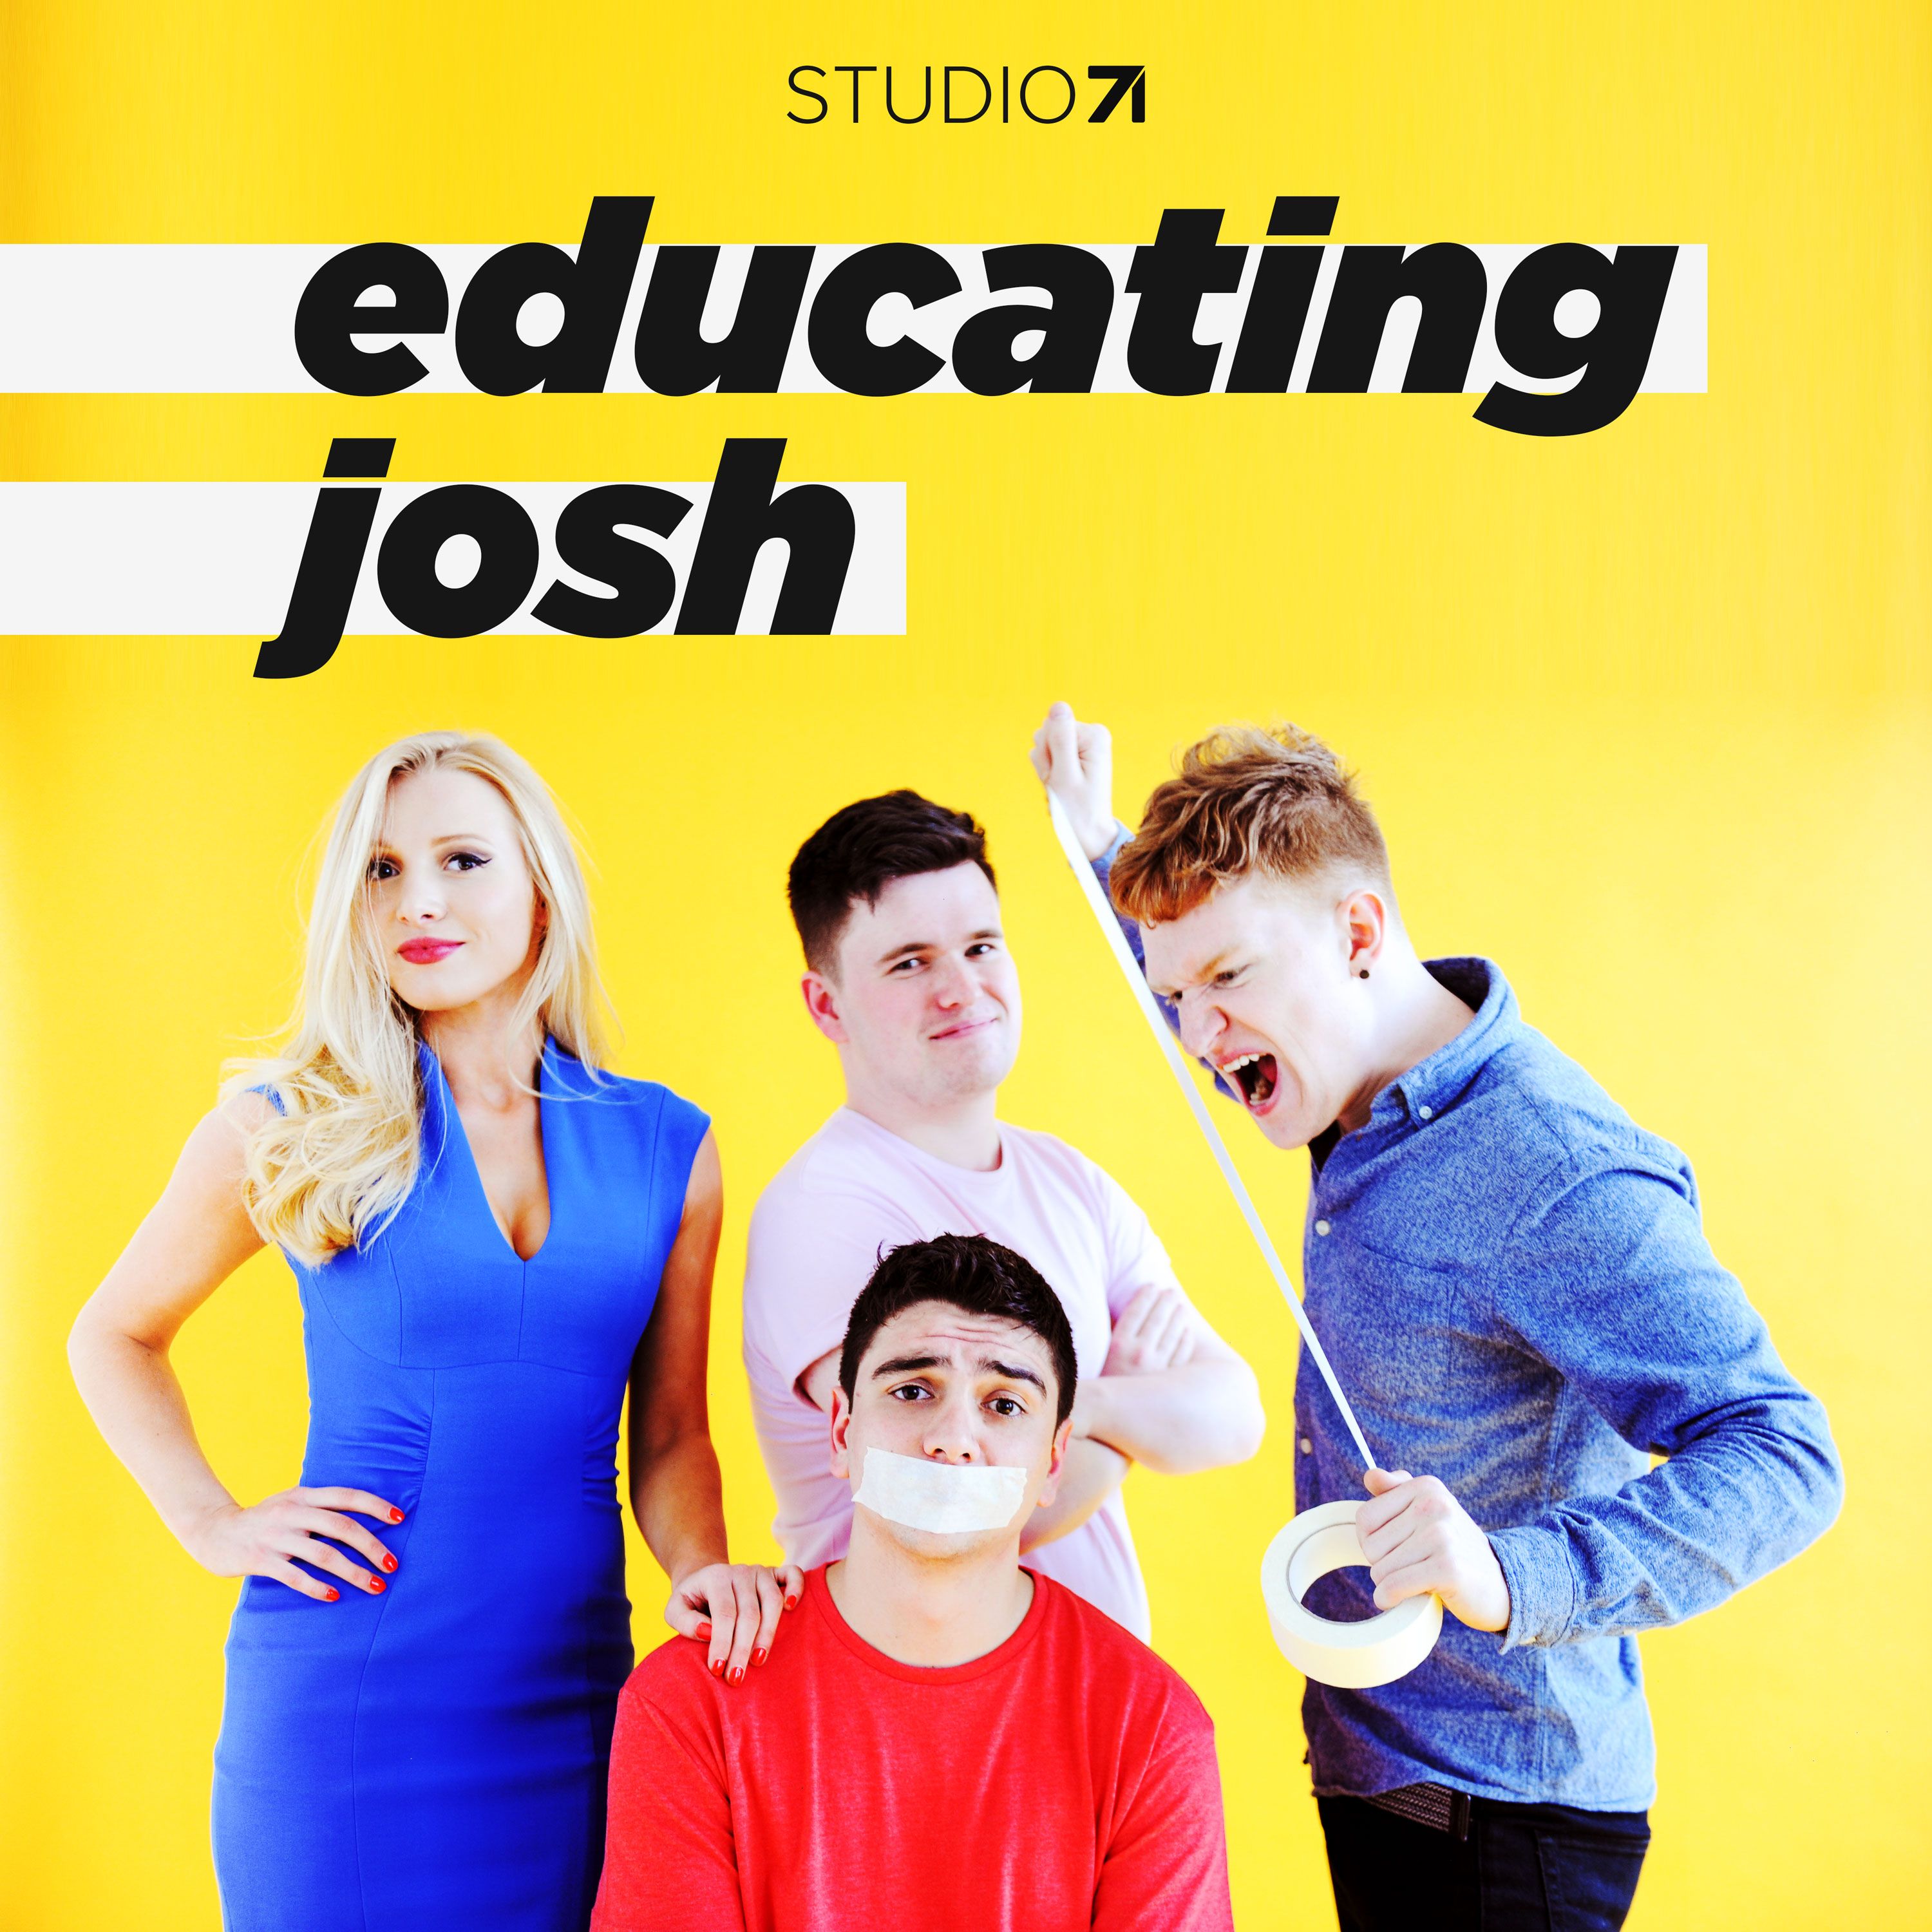 Educating Josh - The Trailer